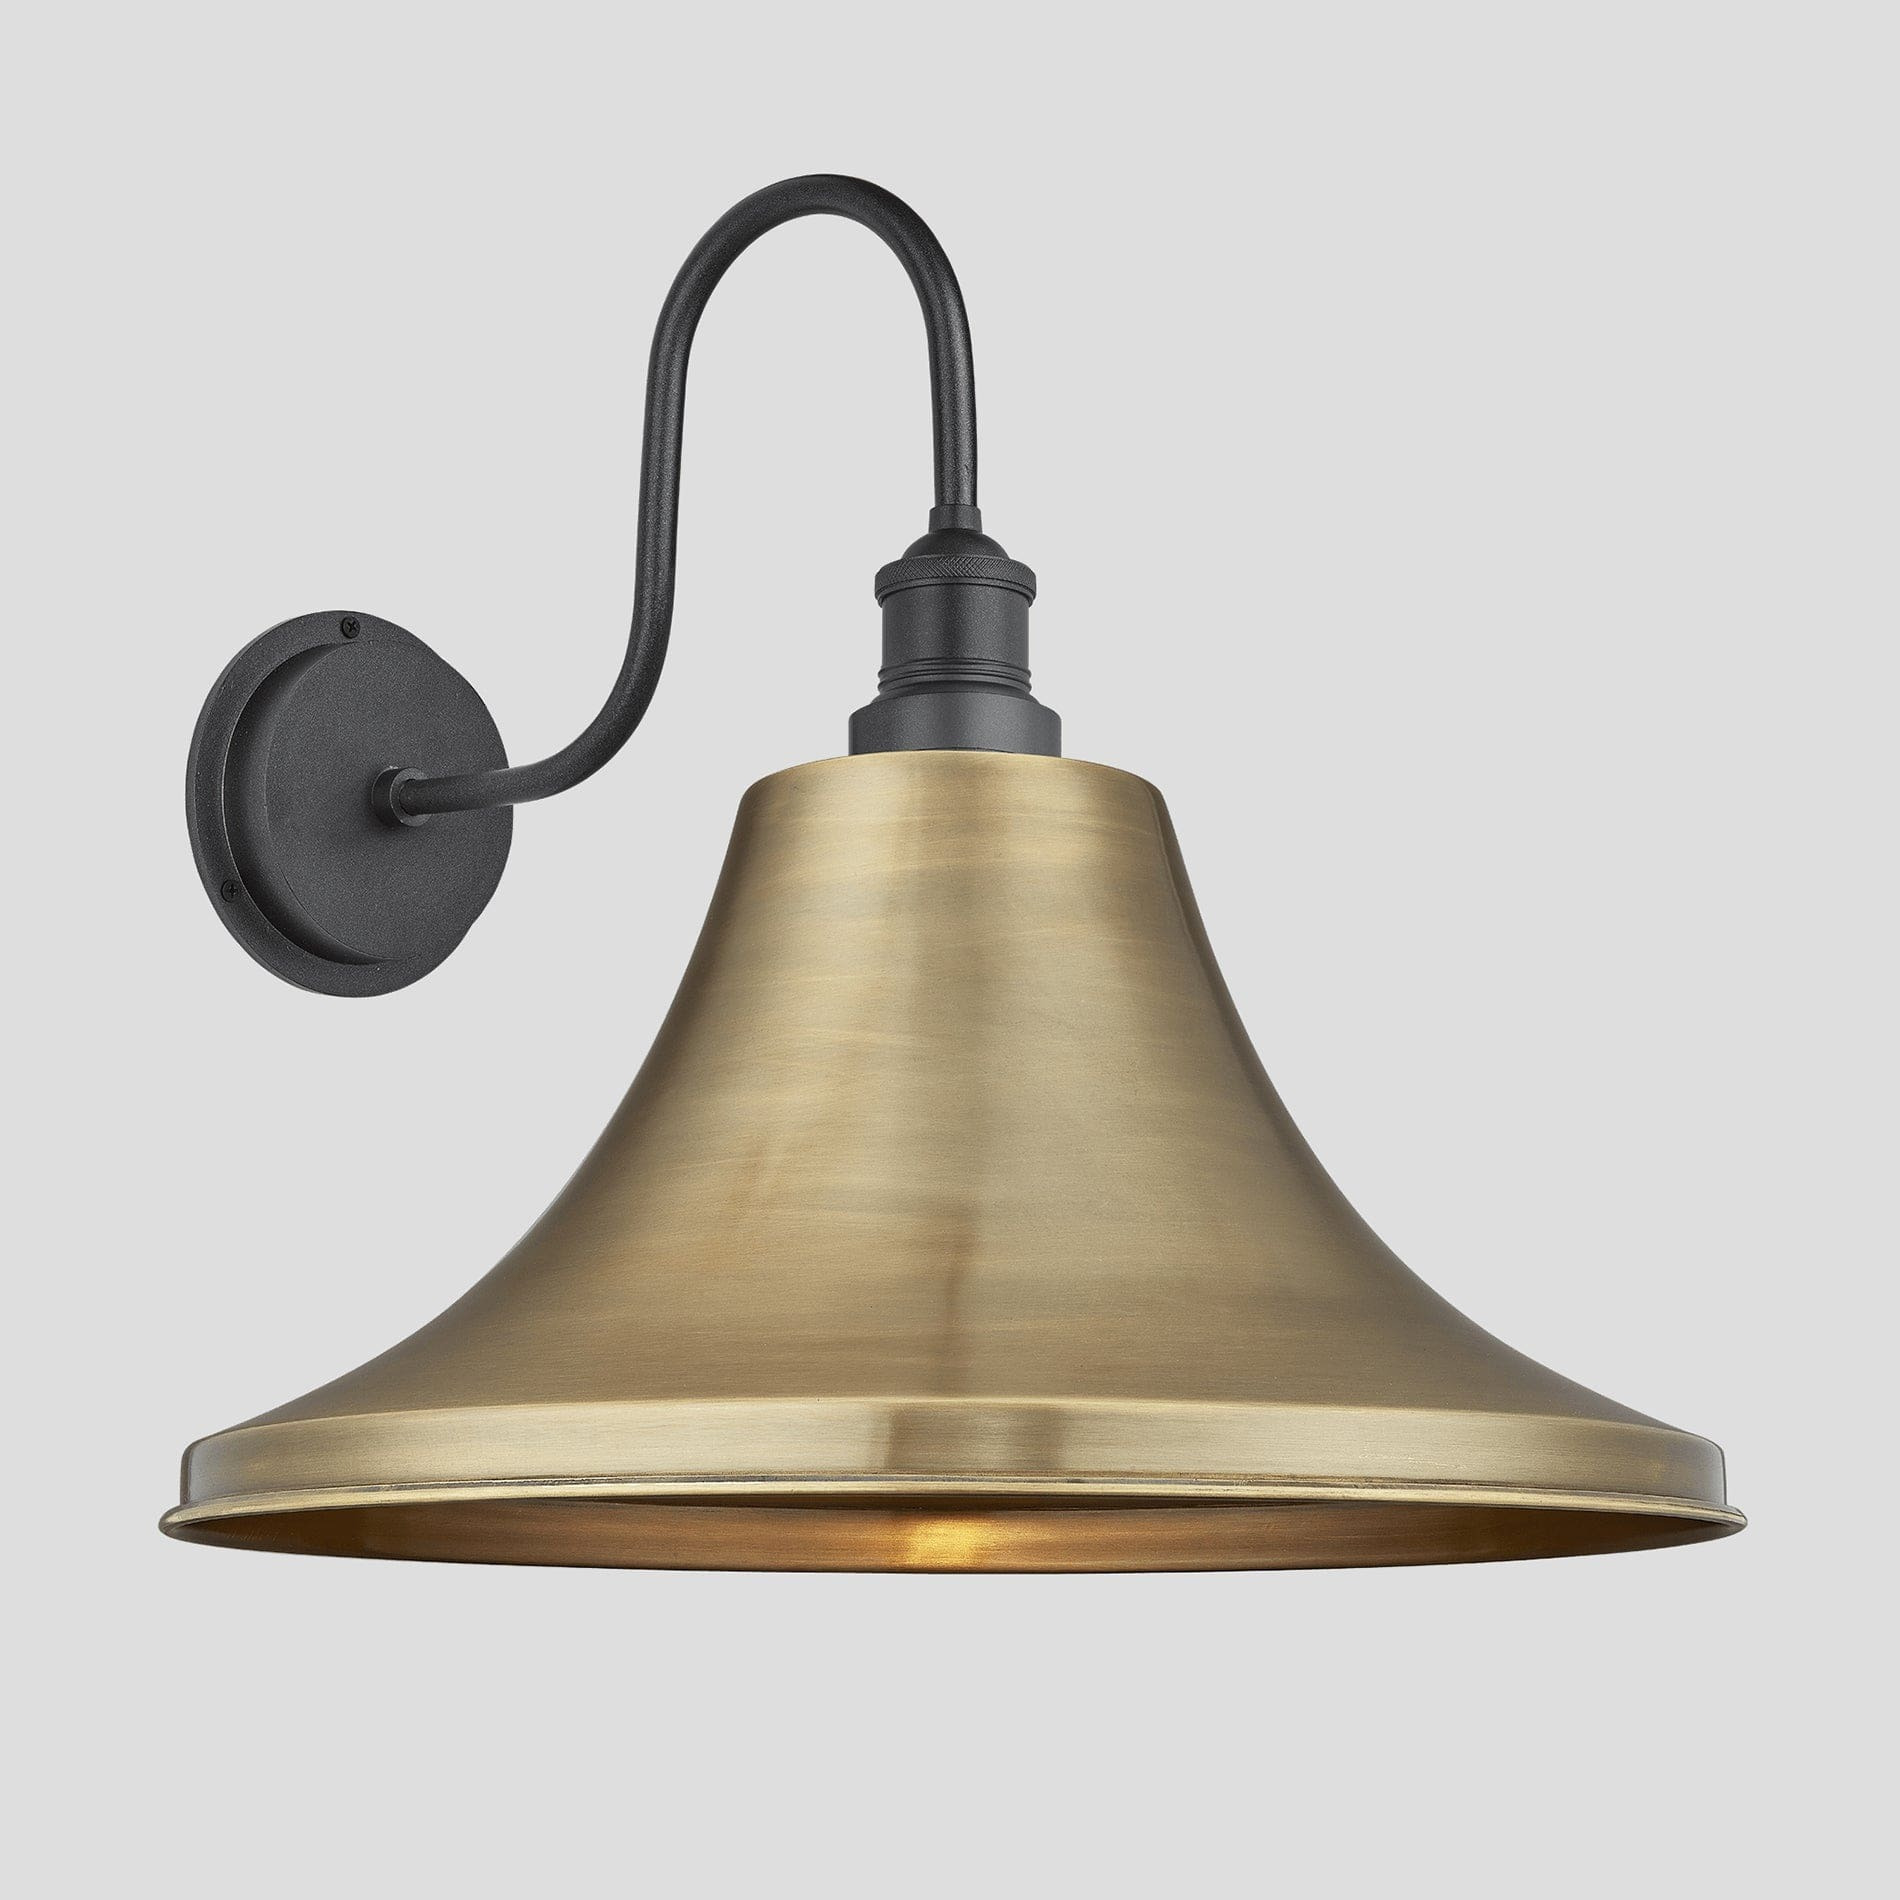 Swan Neck Outdoor & Bathroom Giant Bell Wall Light - 20 Inch – Brass